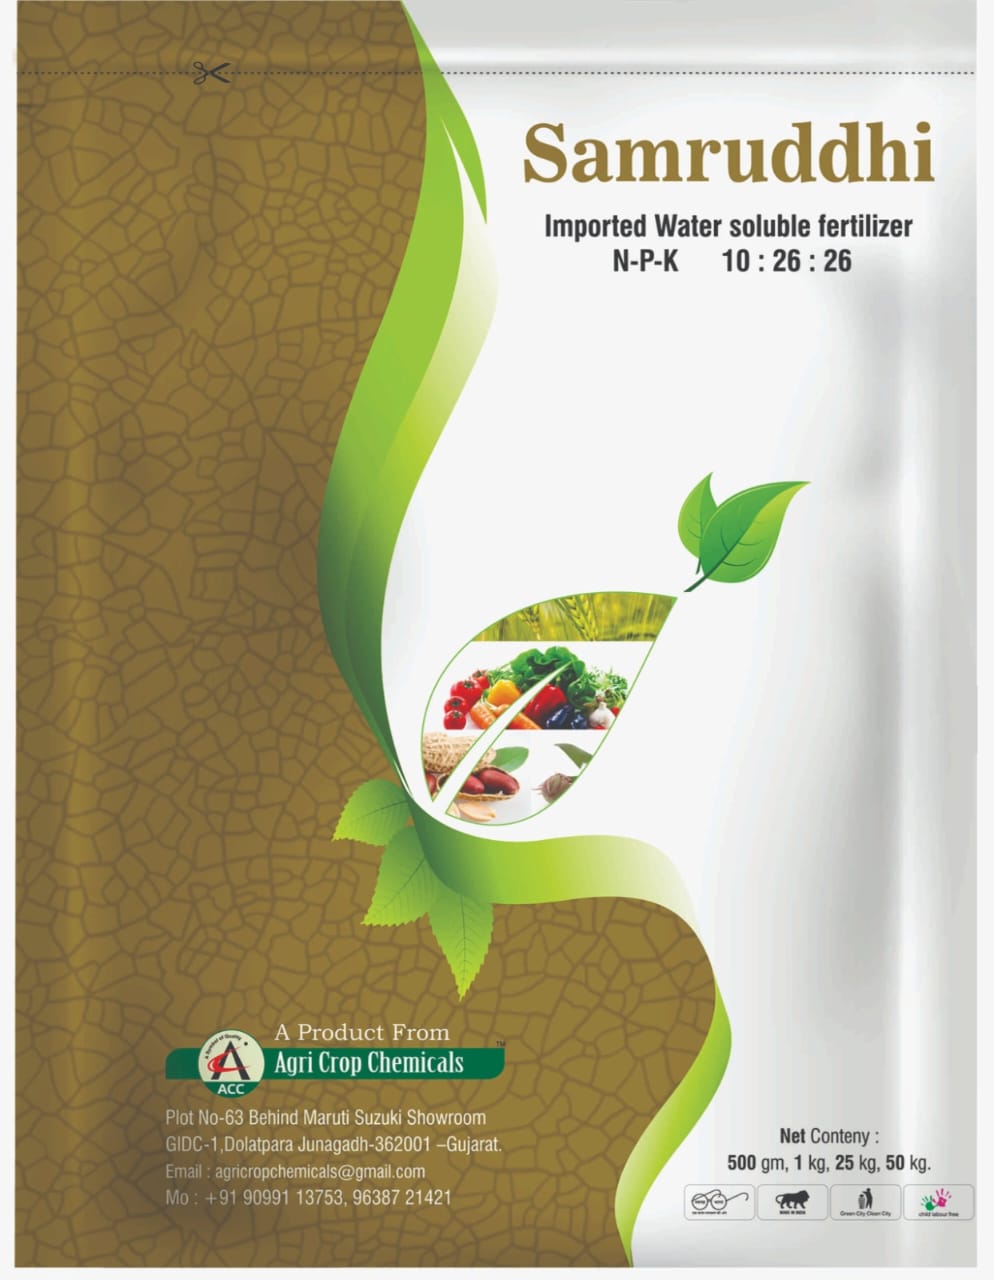 Water Soluble Fertilizer NPK 10:26:26 Samruddhi Fertilizer Weight - 1 Kg